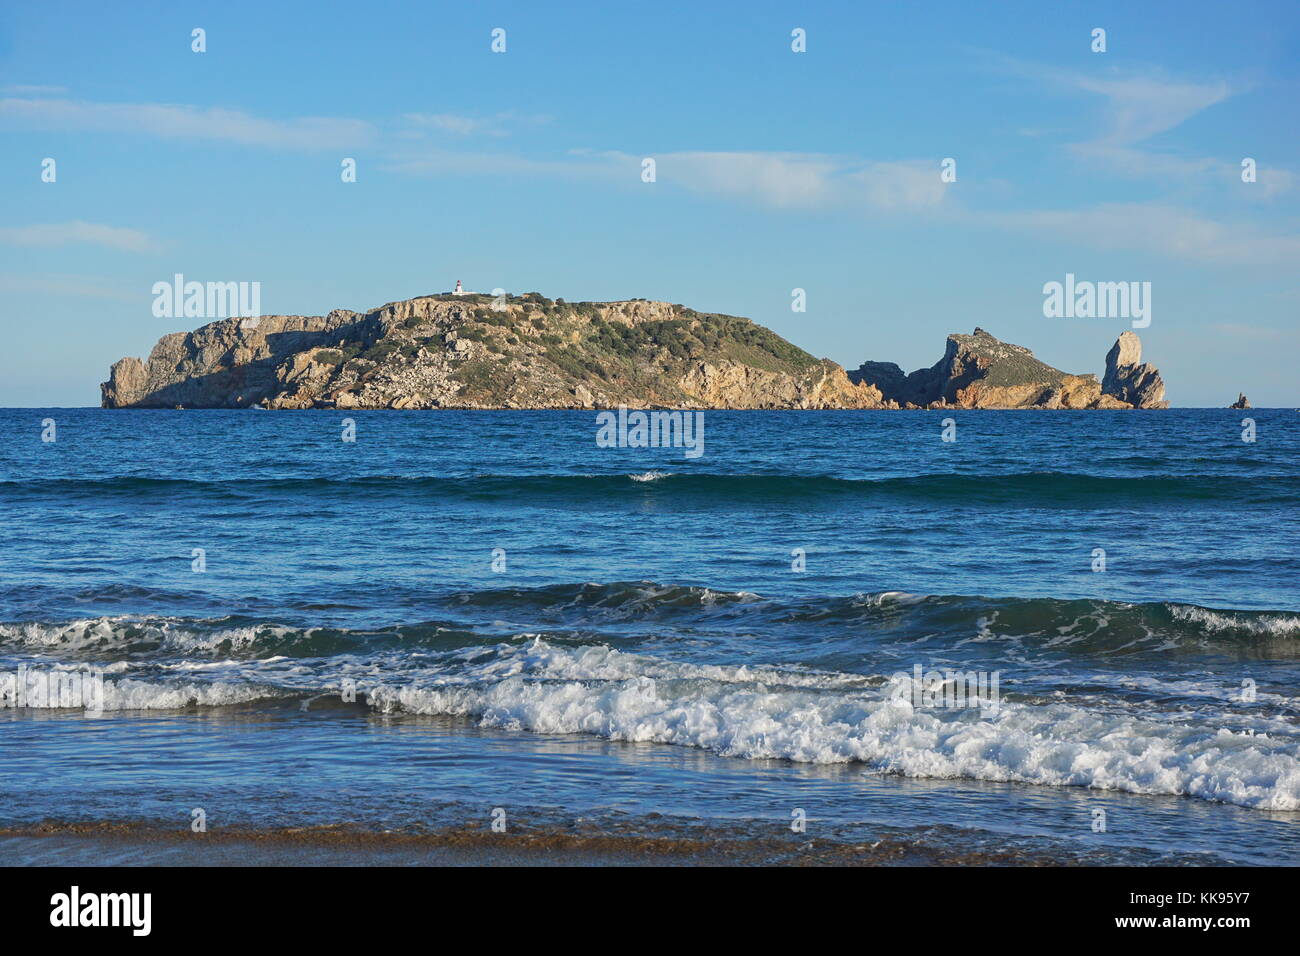 Spain marine reserve the Medes islands, Mediterranean sea, Estartit, Costa Brava, Catalonia Stock Photo